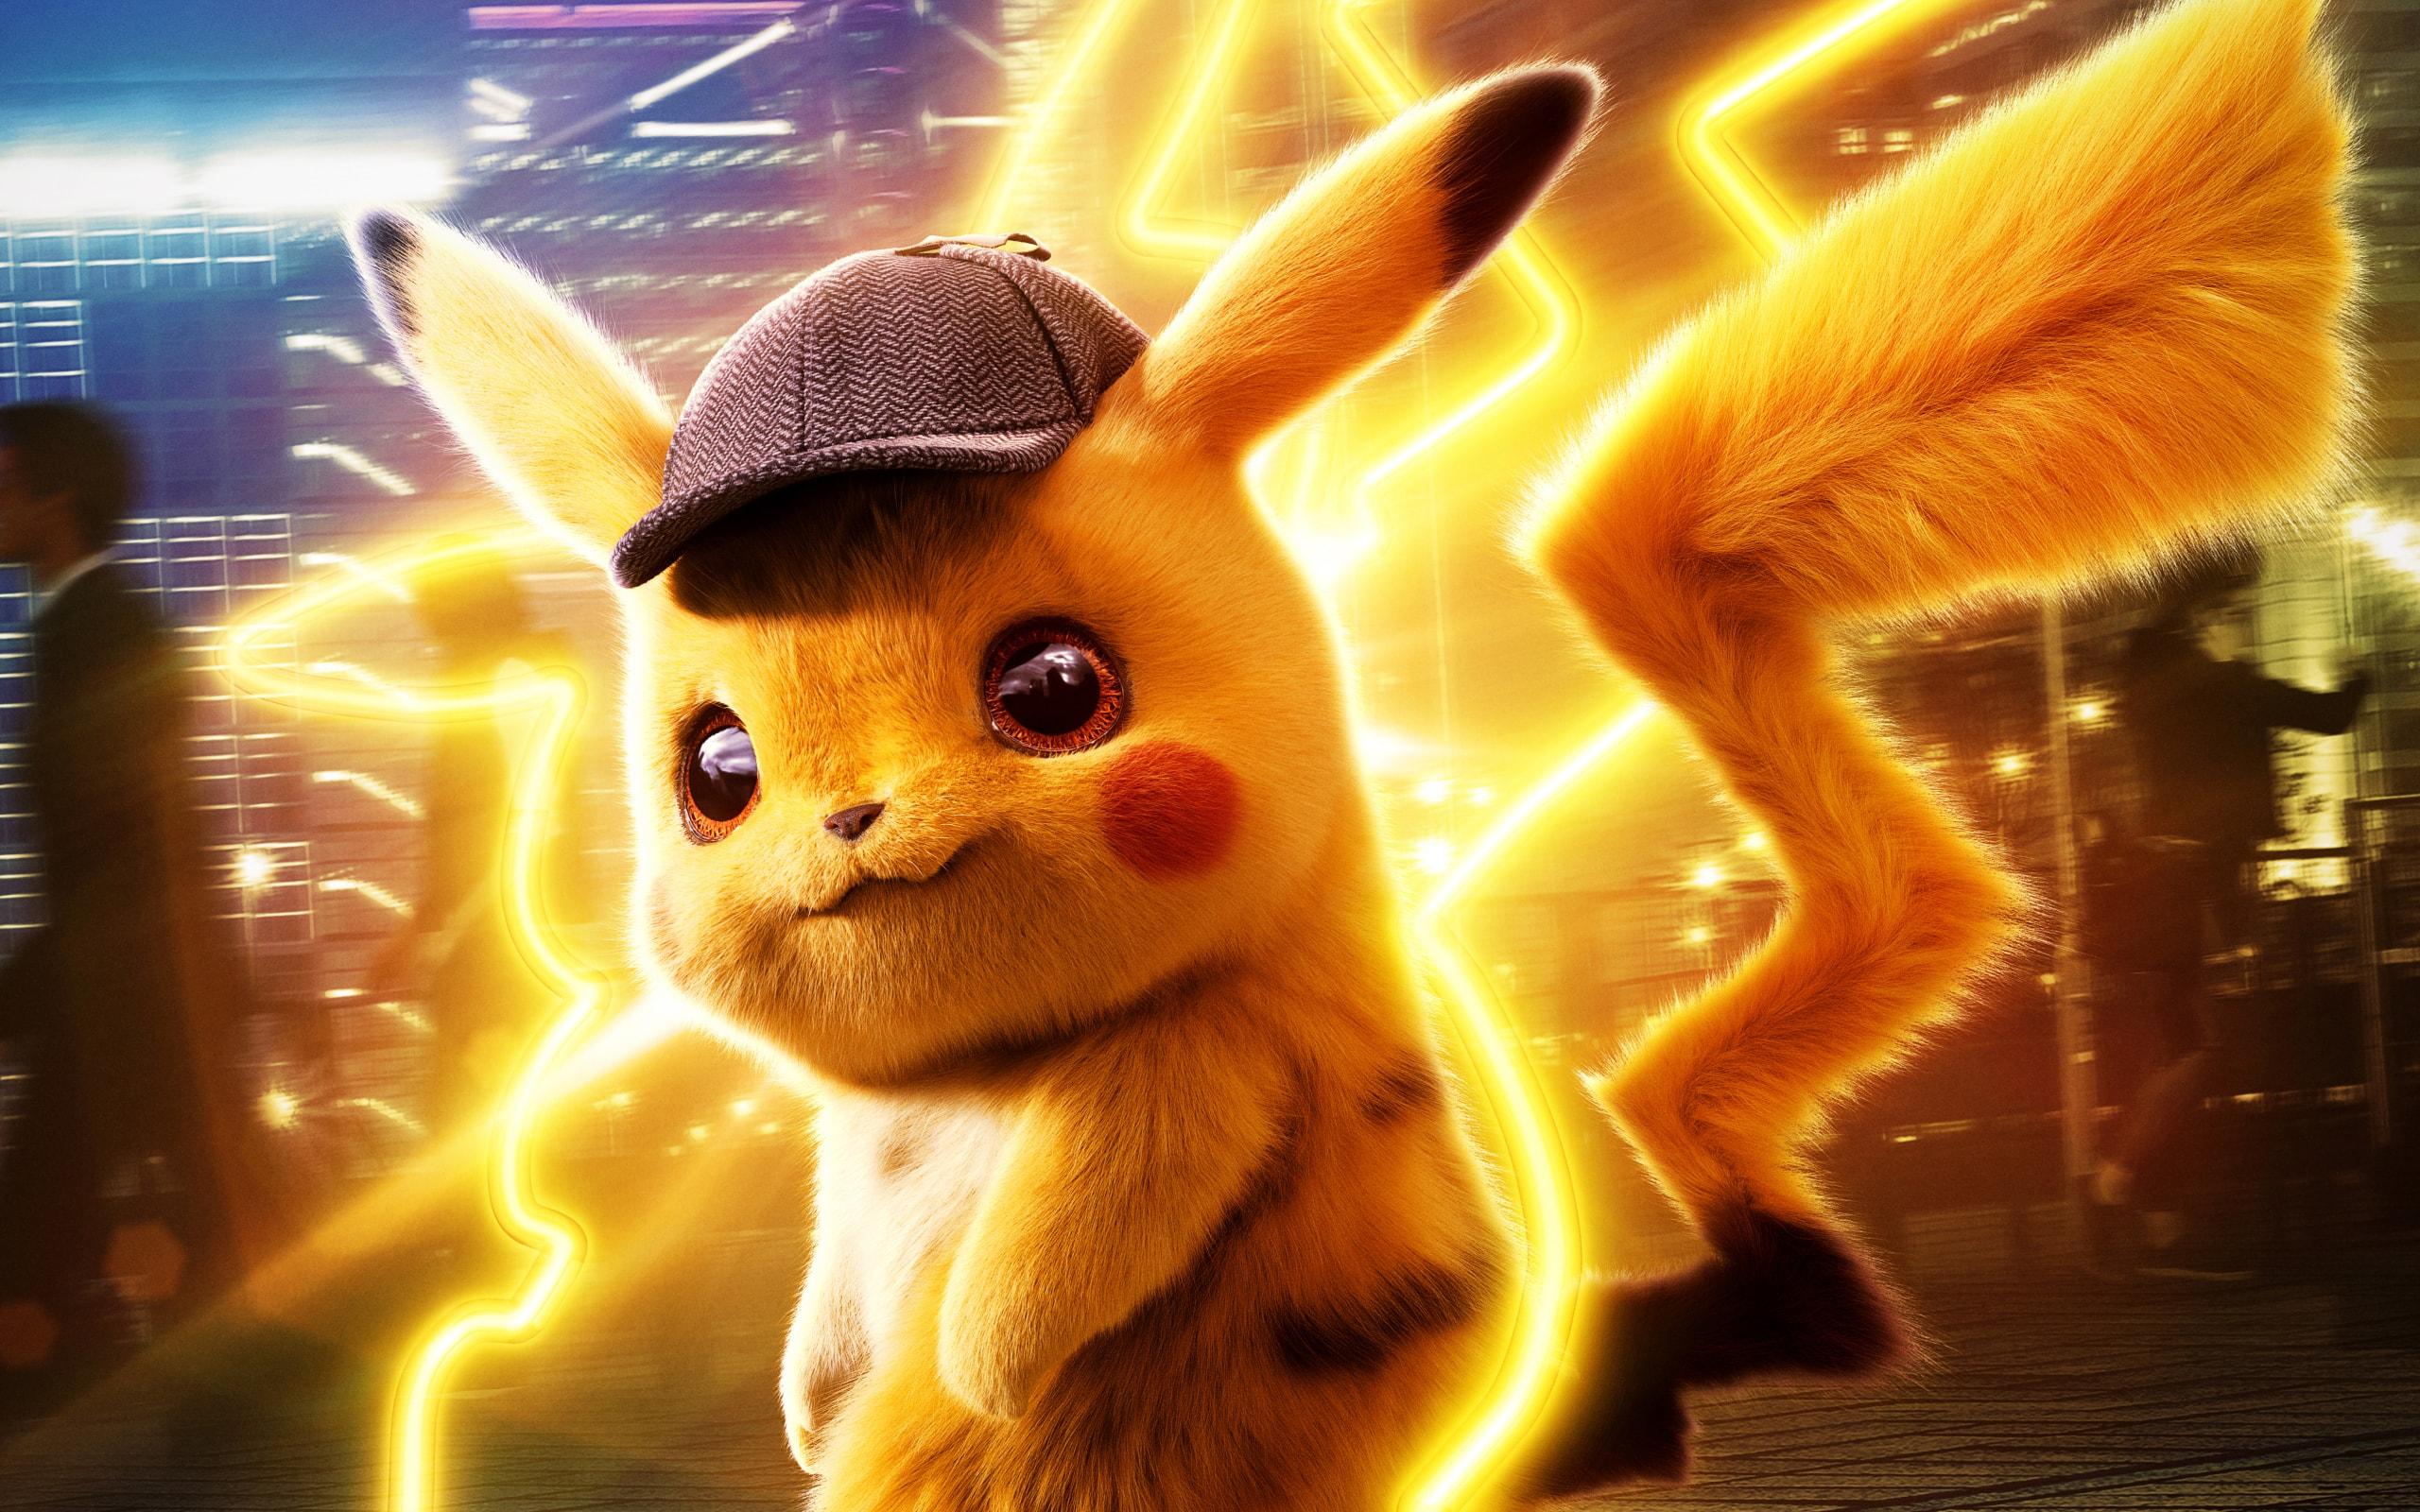 Wallpaper of Movie, Pikachu, Pokémon Detective Pikachu background